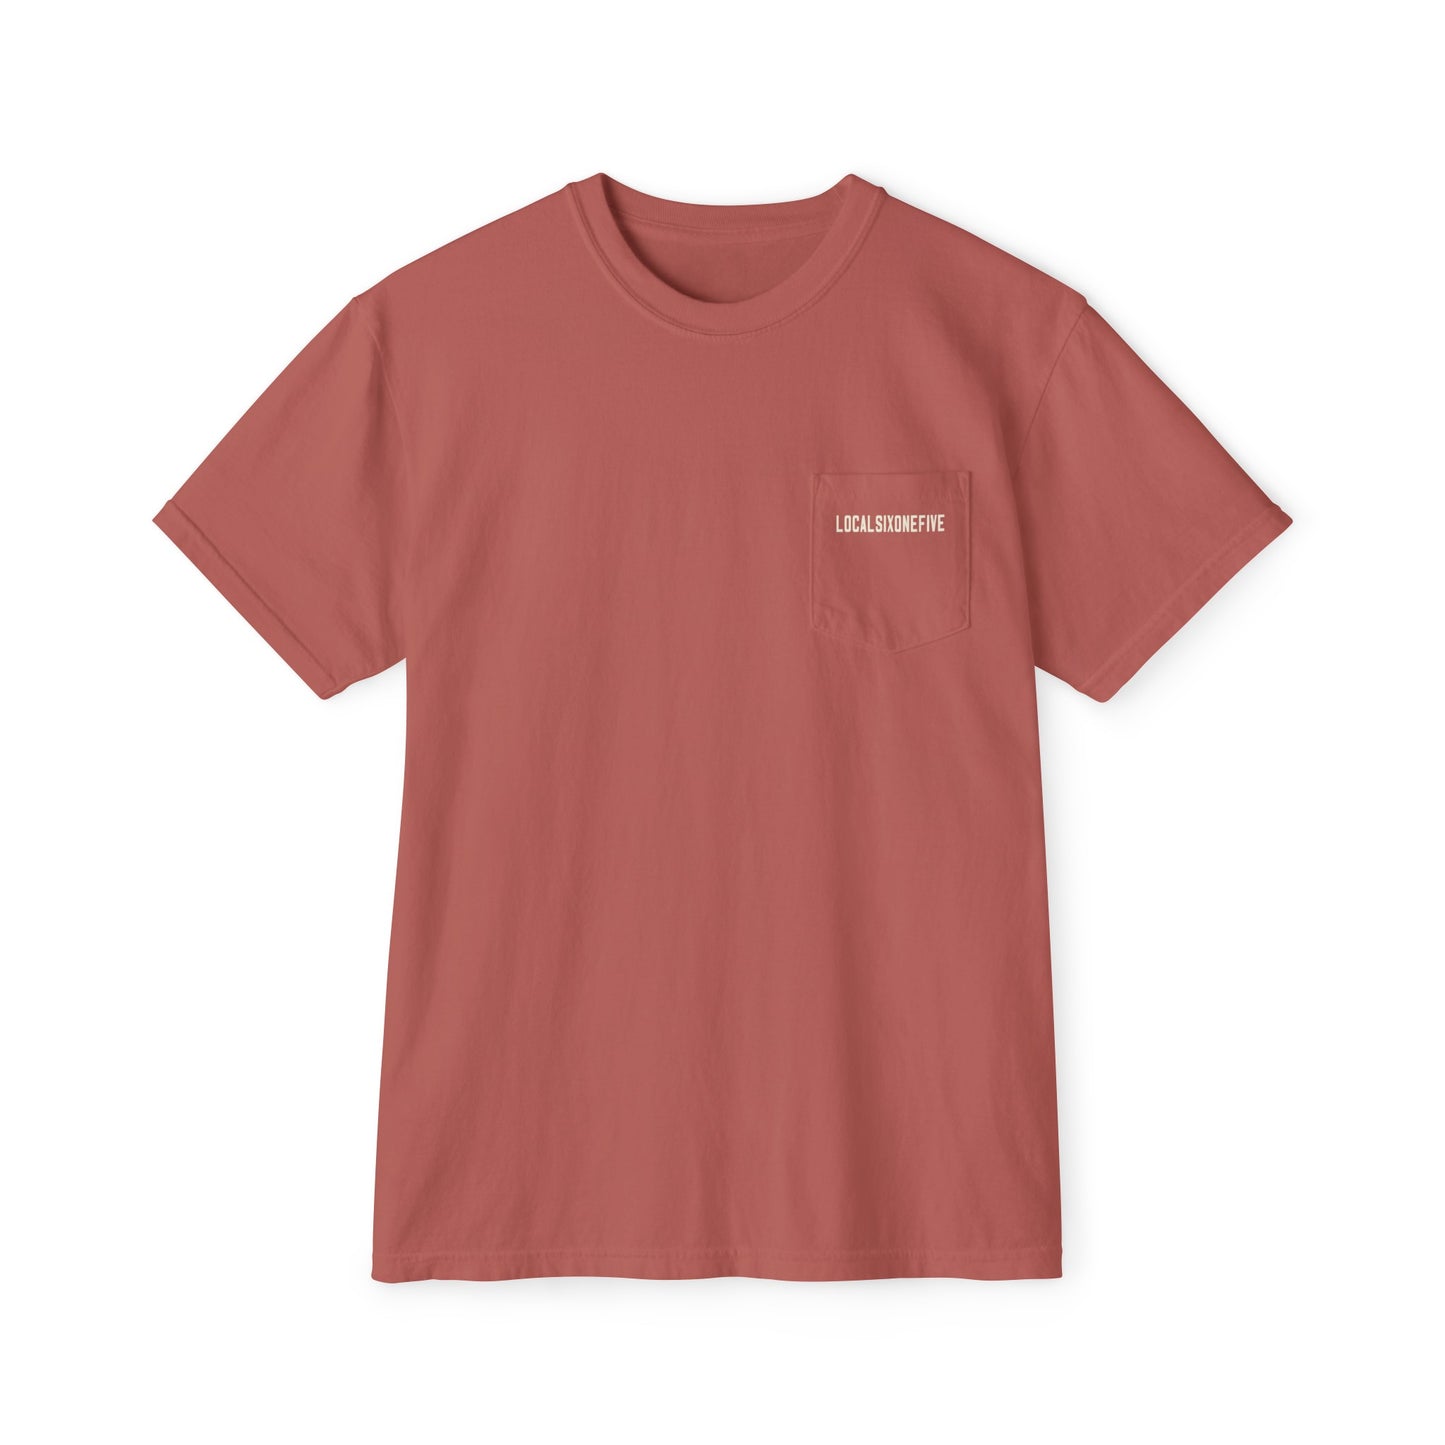 Mori Skull Pattern Unisex Garment-Dyed Pocket T-Shirt